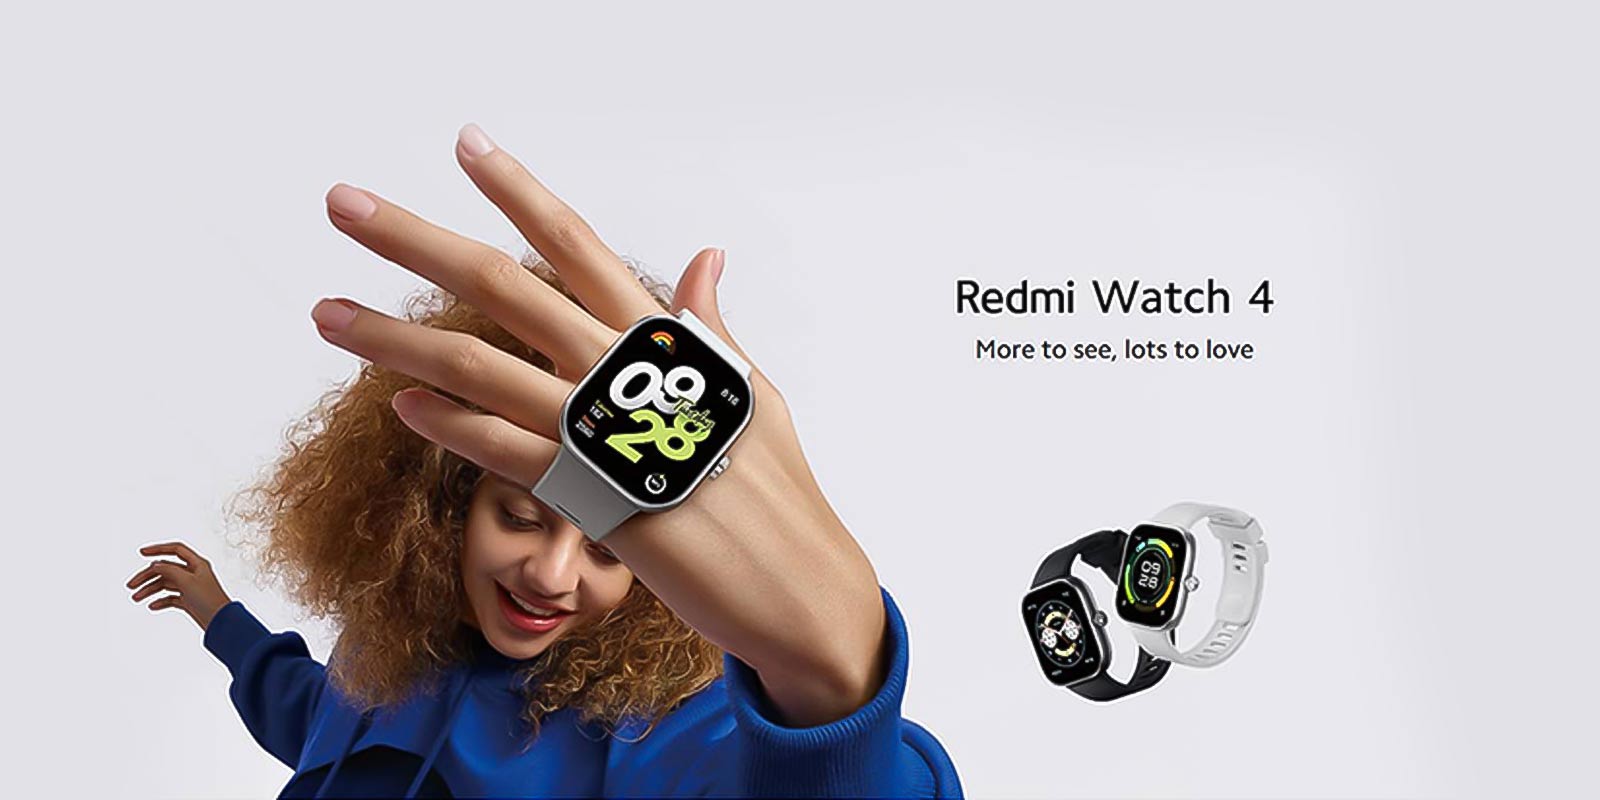  Redmi watch 4 